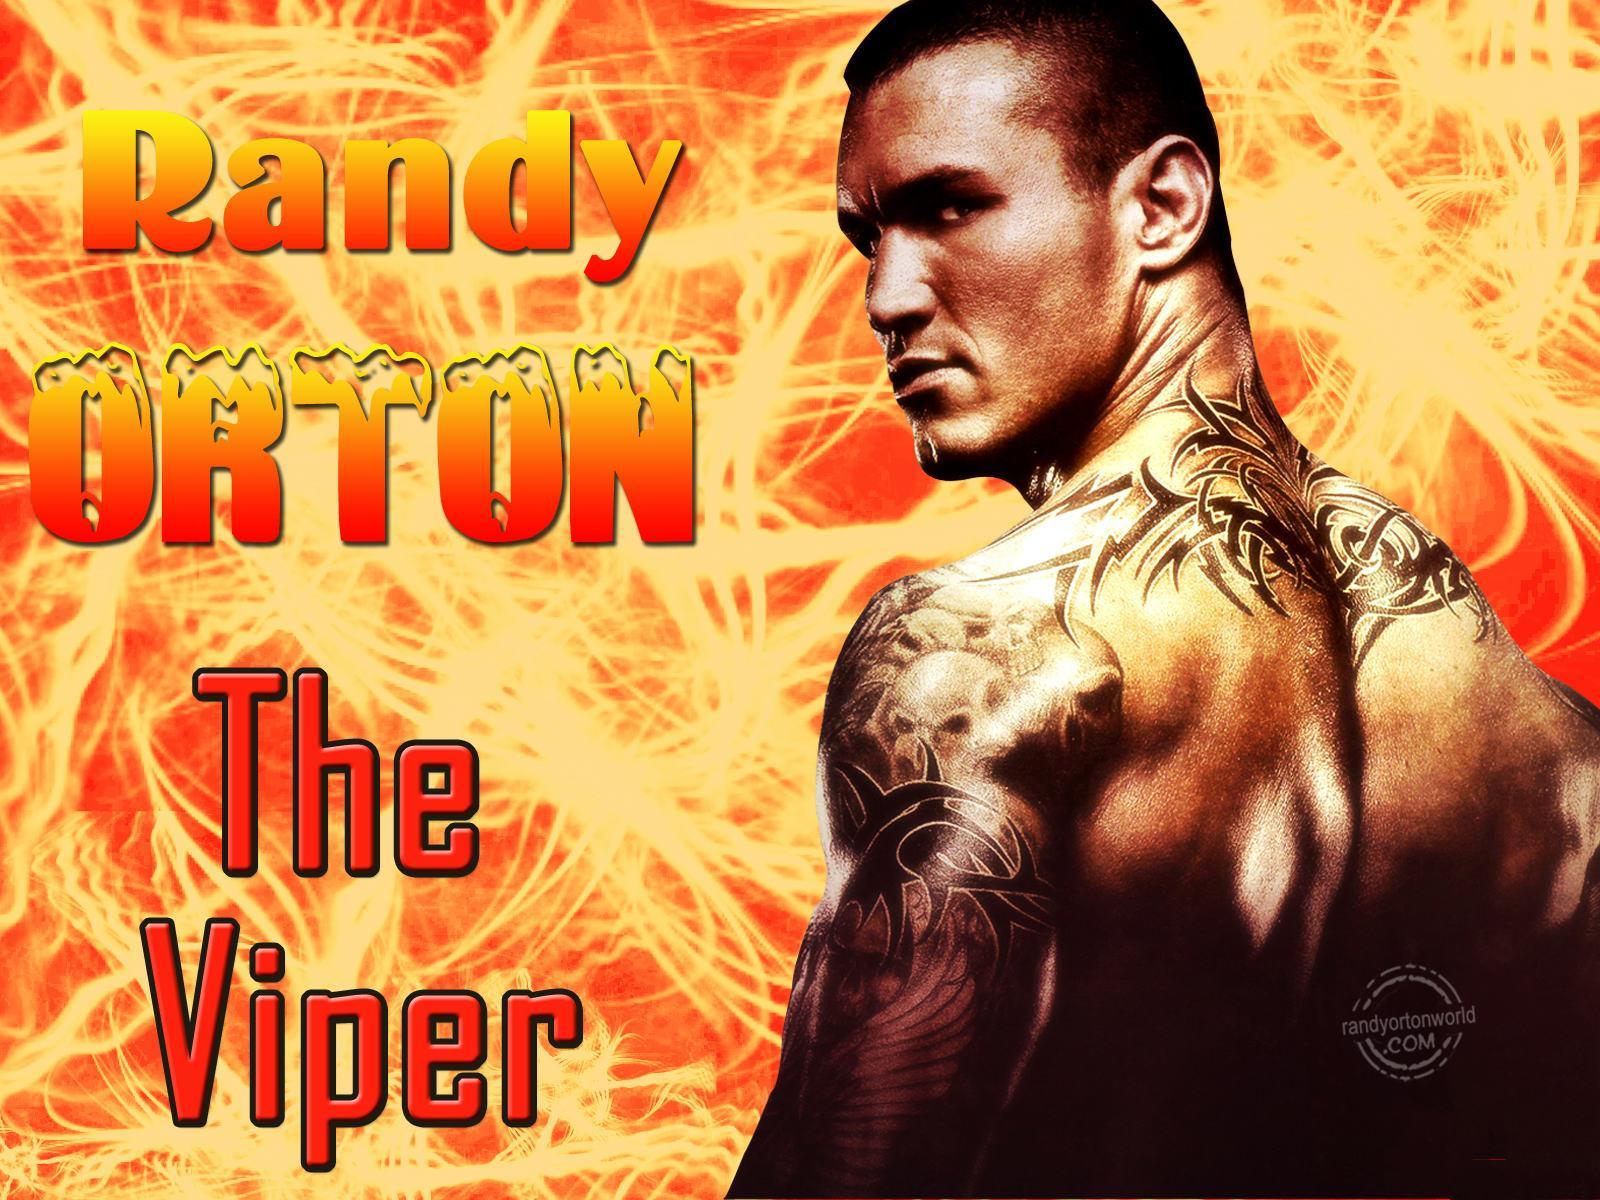 WWE Randy Orton HD New Wallpaper 2012. All Sports Players